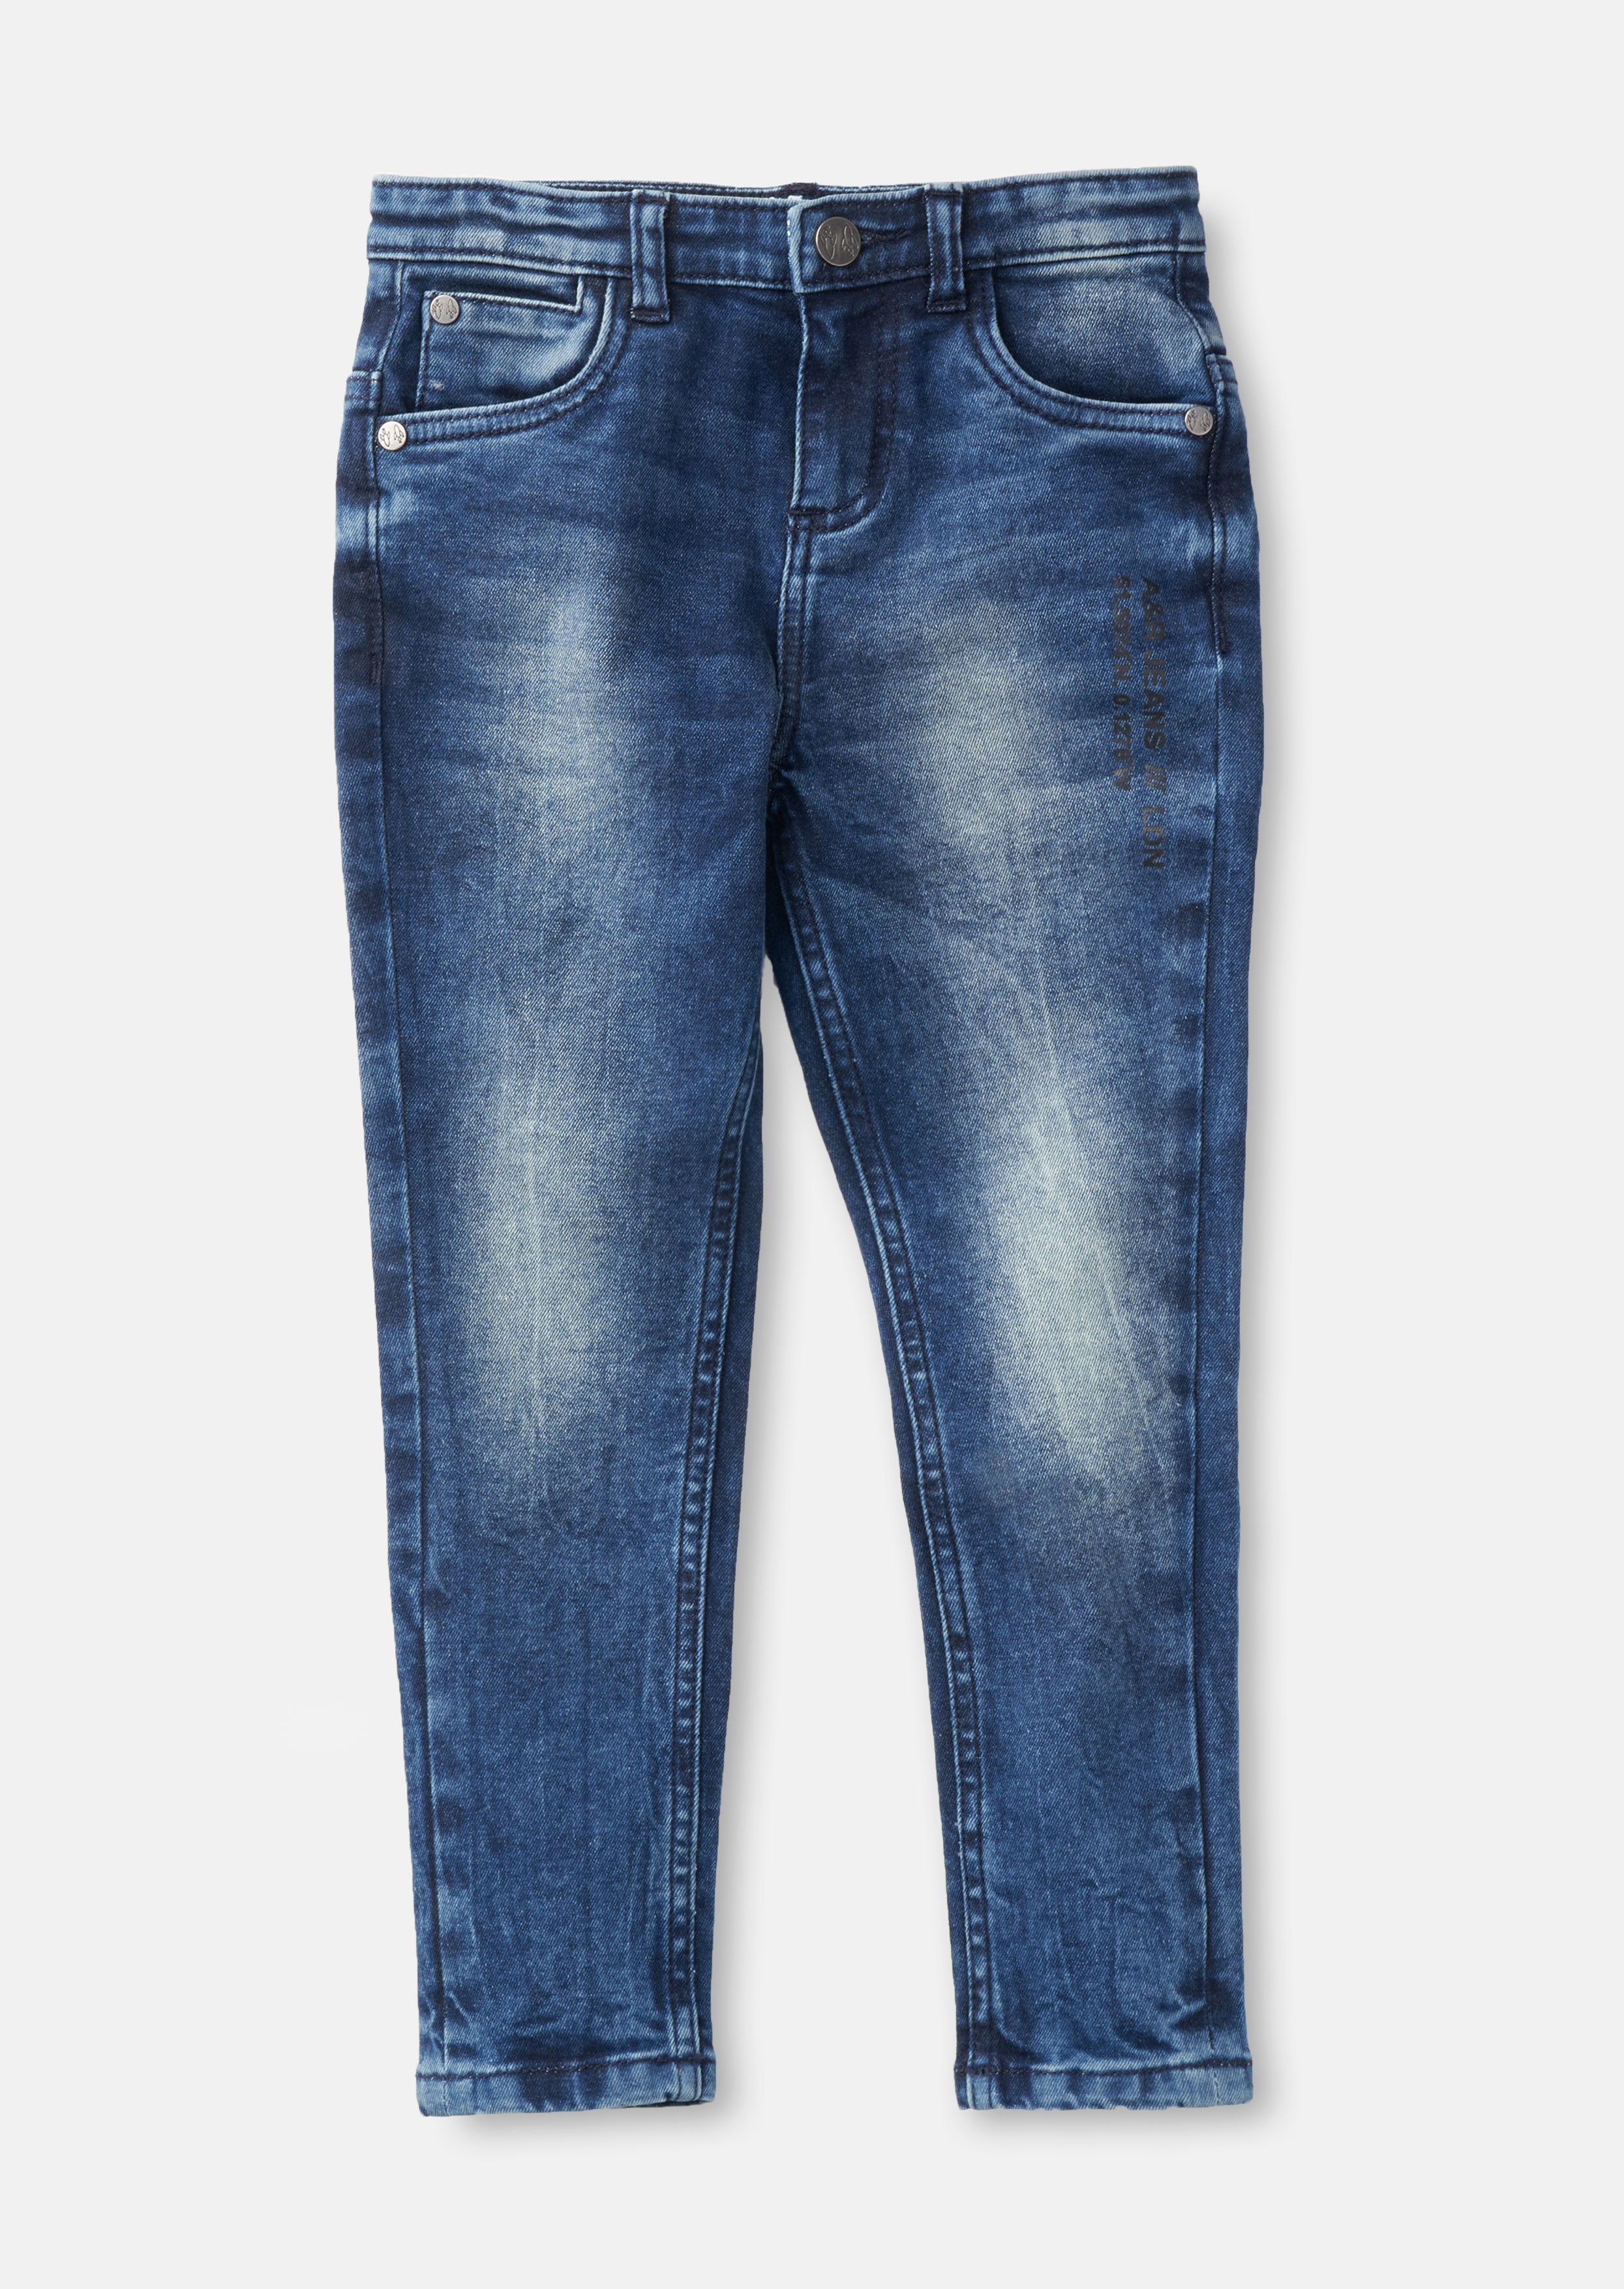 File:Denim Jeans Pant Display.JPG - Wikipedia